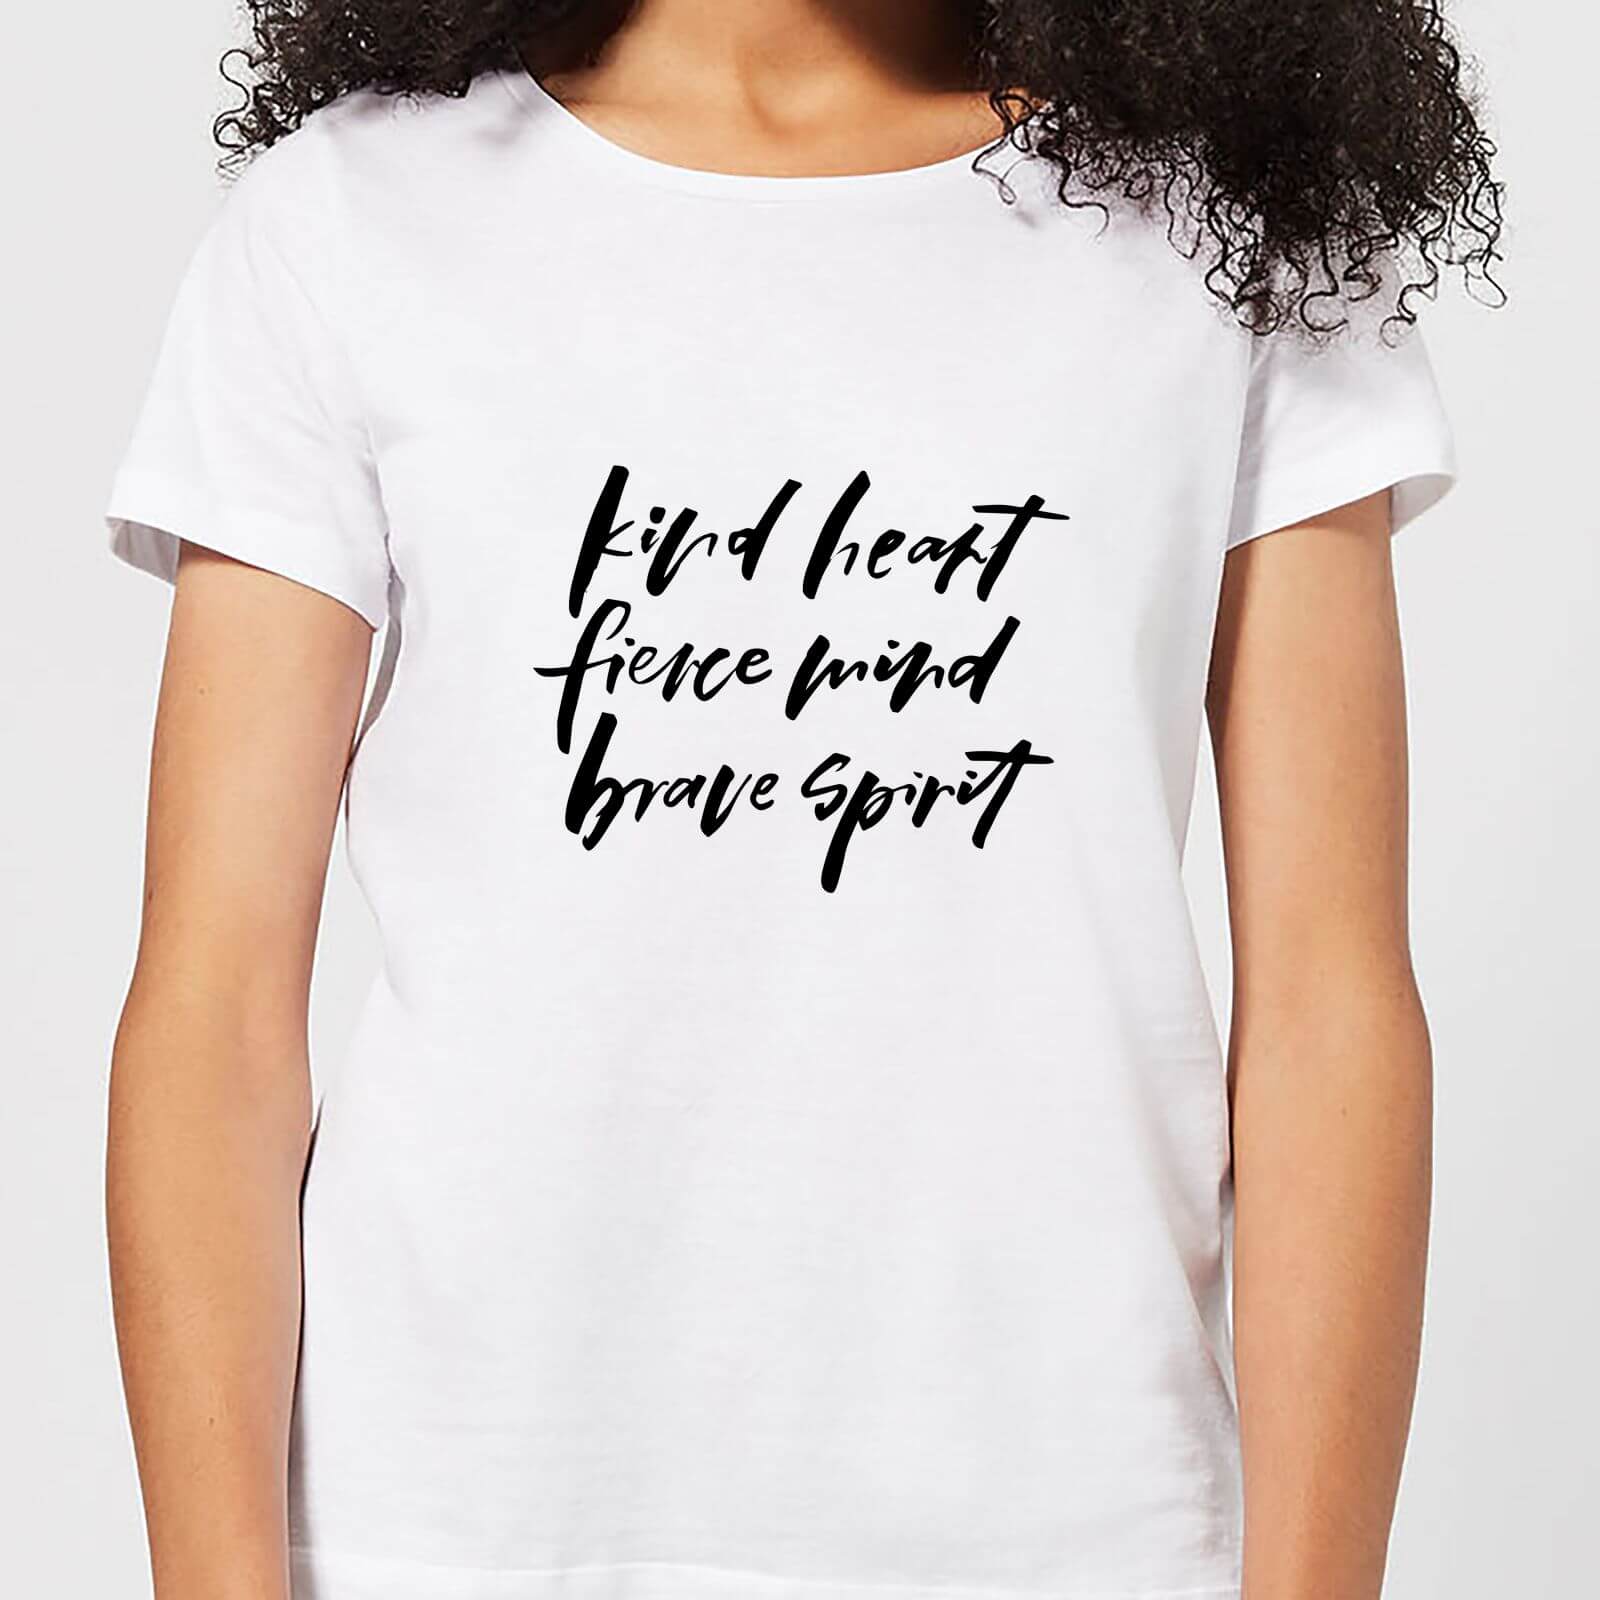 Kind Heart, Fierce Mind, Brave Spirit Women's T-Shirt - White - S - White